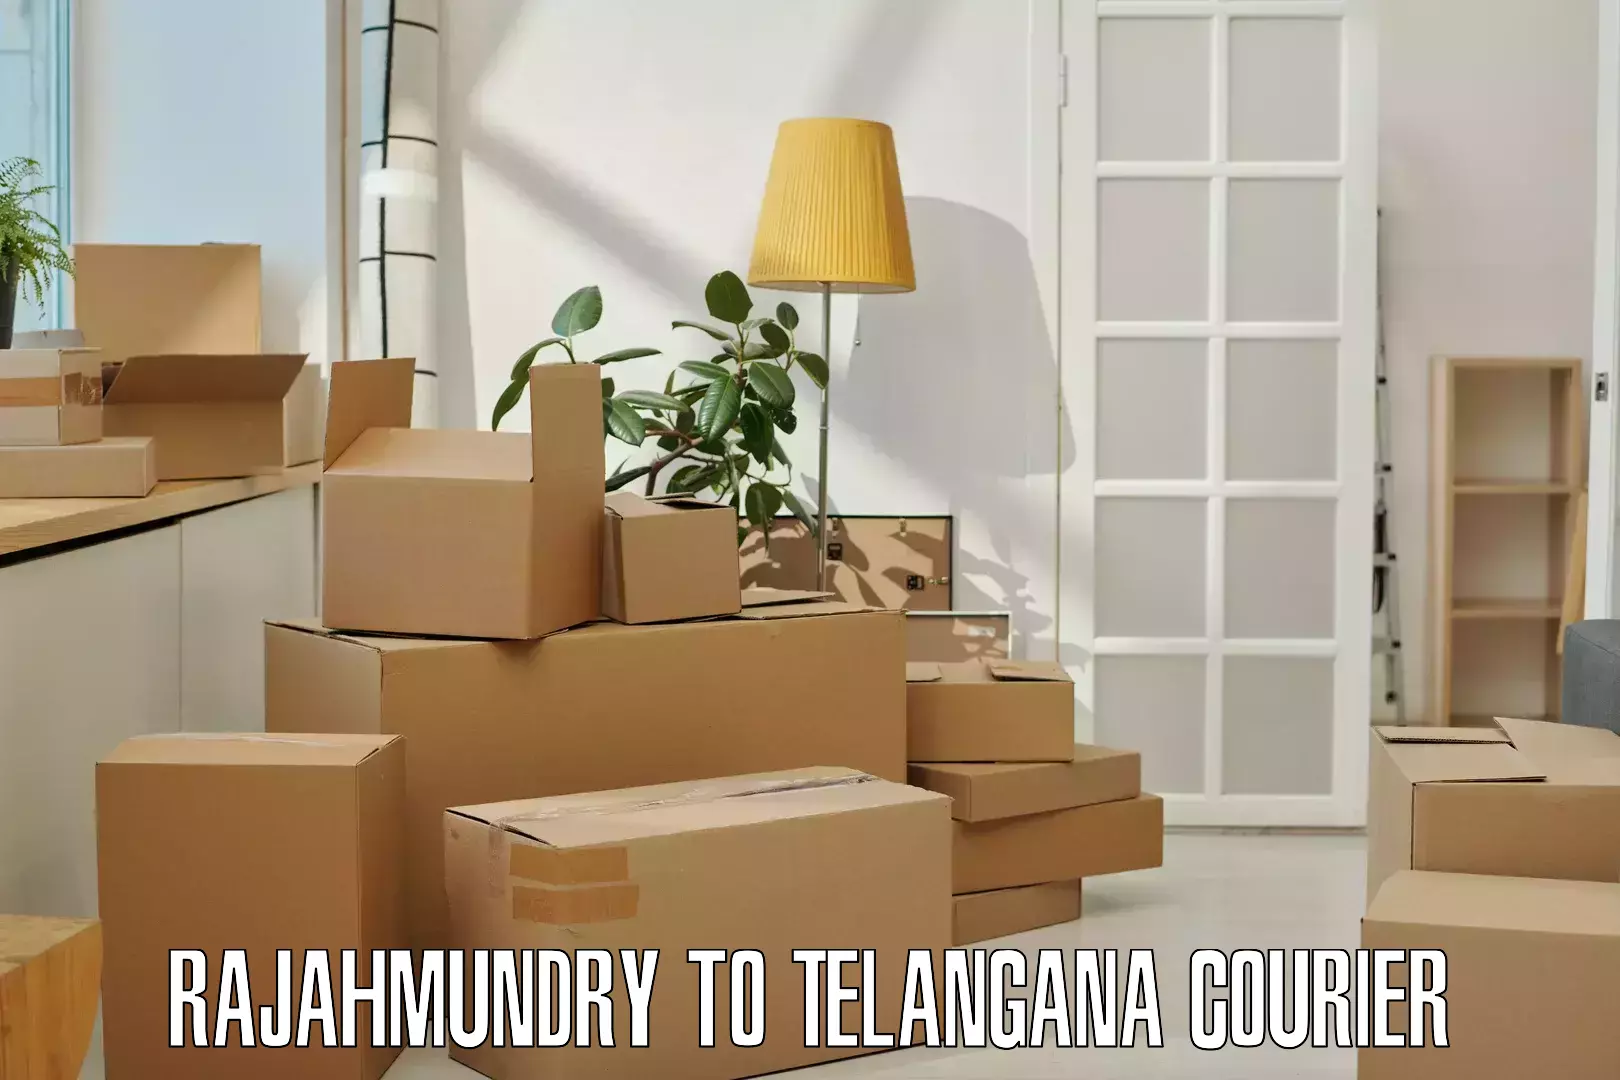 Digital courier platforms Rajahmundry to Manopad